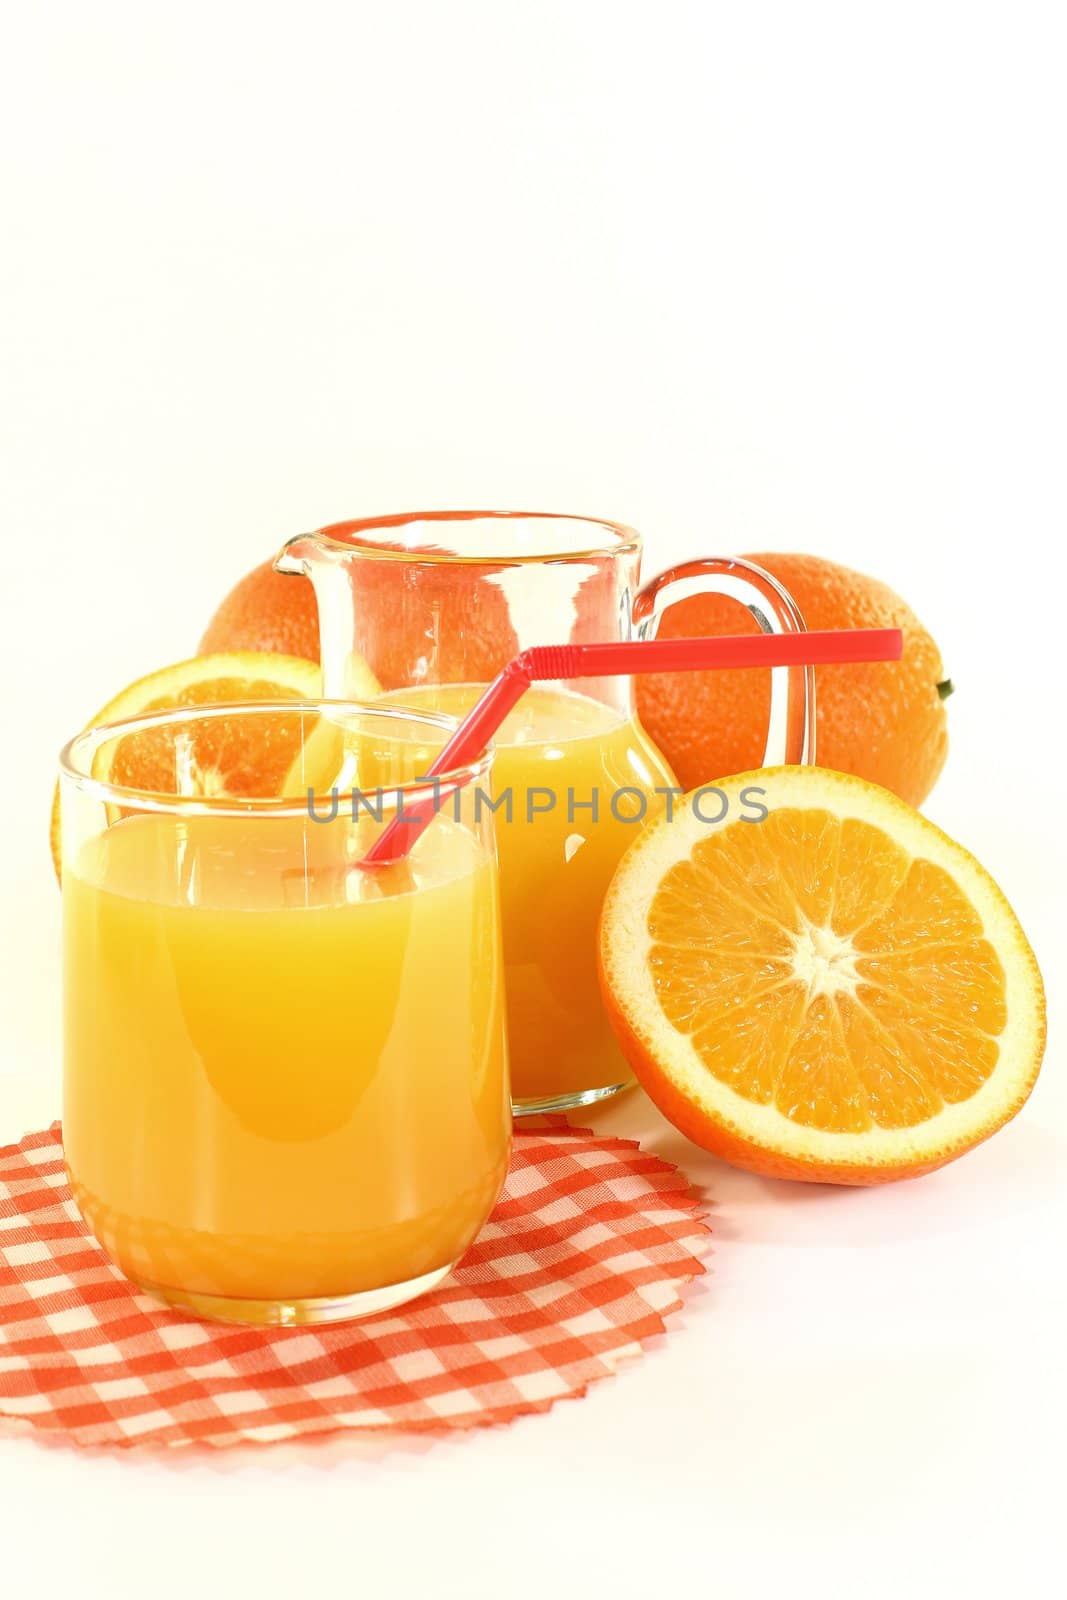 Orange juice by silencefoto